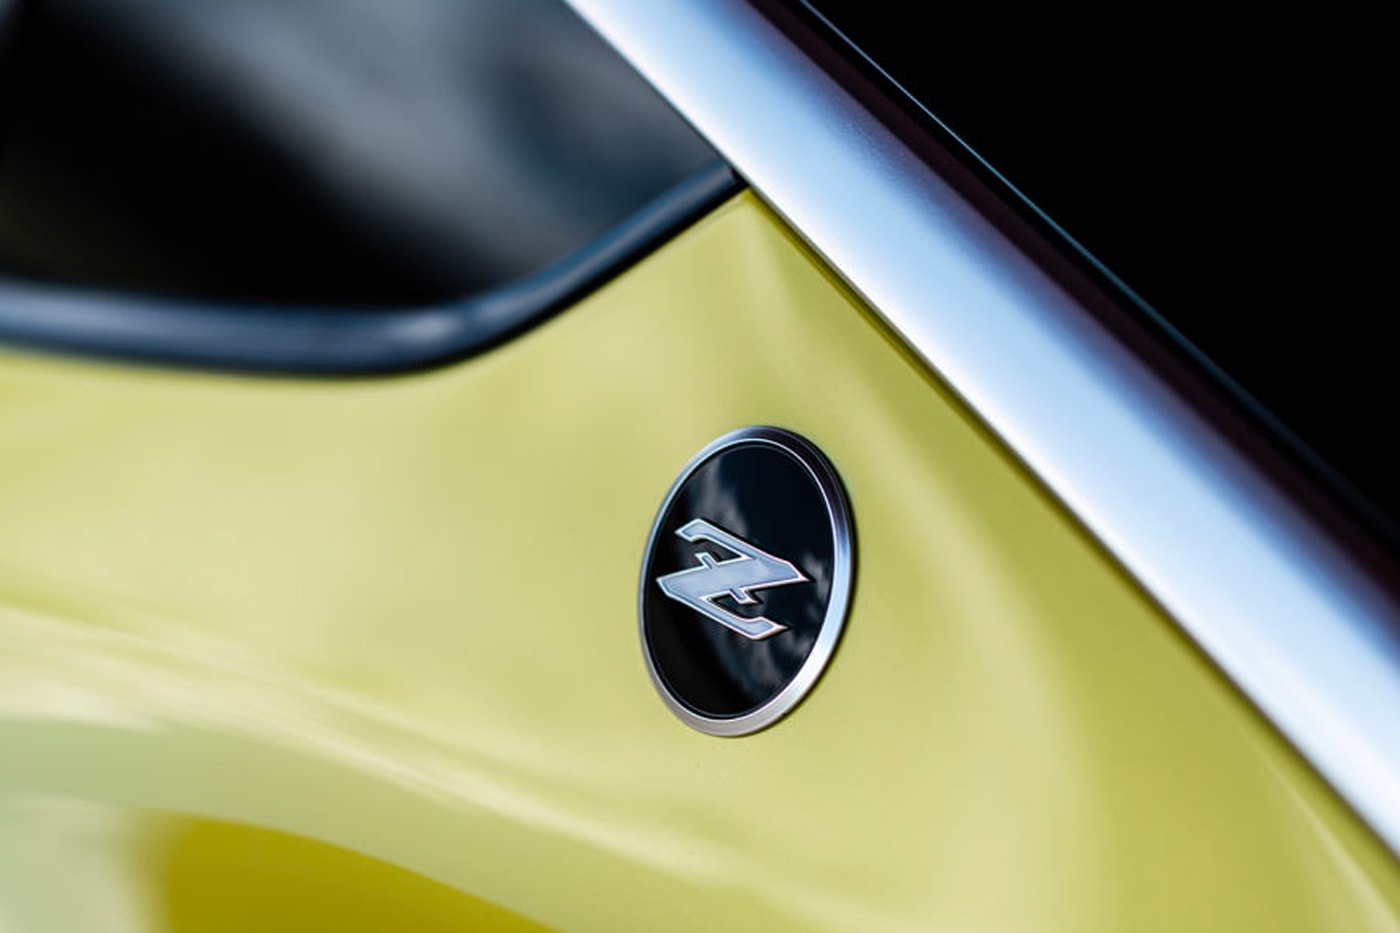 Nissan Z Proto 2020 news 350Z 370Z 300ZX 400Z 240Z Datsun sportscars racing 